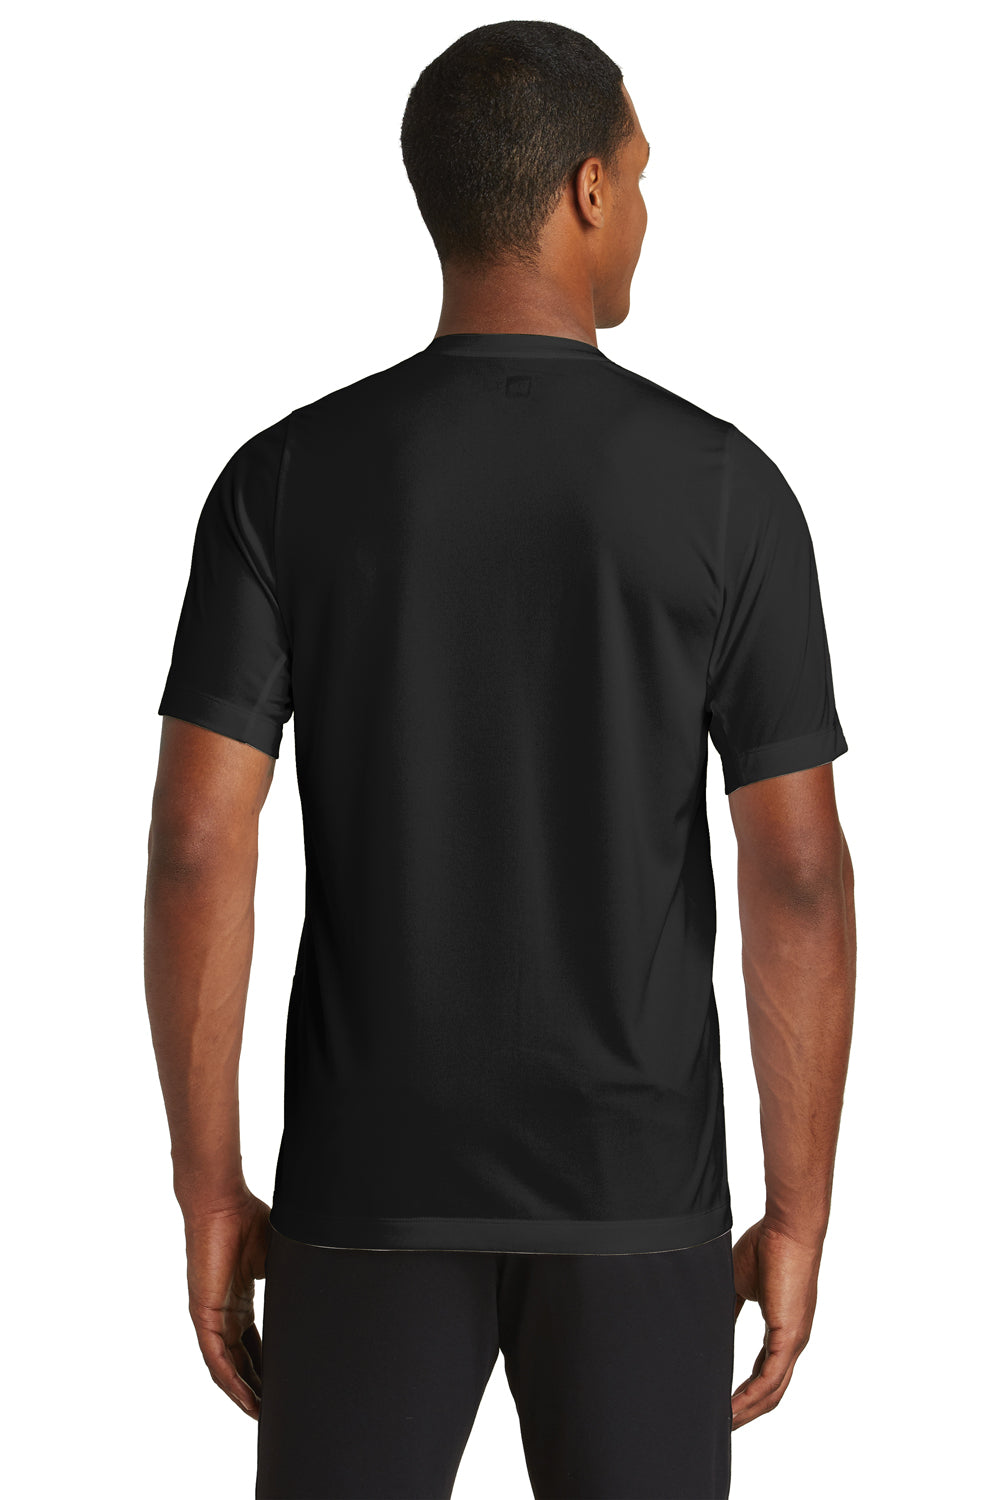 New Era NEA200 Mens Series Performance Jersey Moisture Wicking Short Sleeve Crewneck T-Shirt Black Back